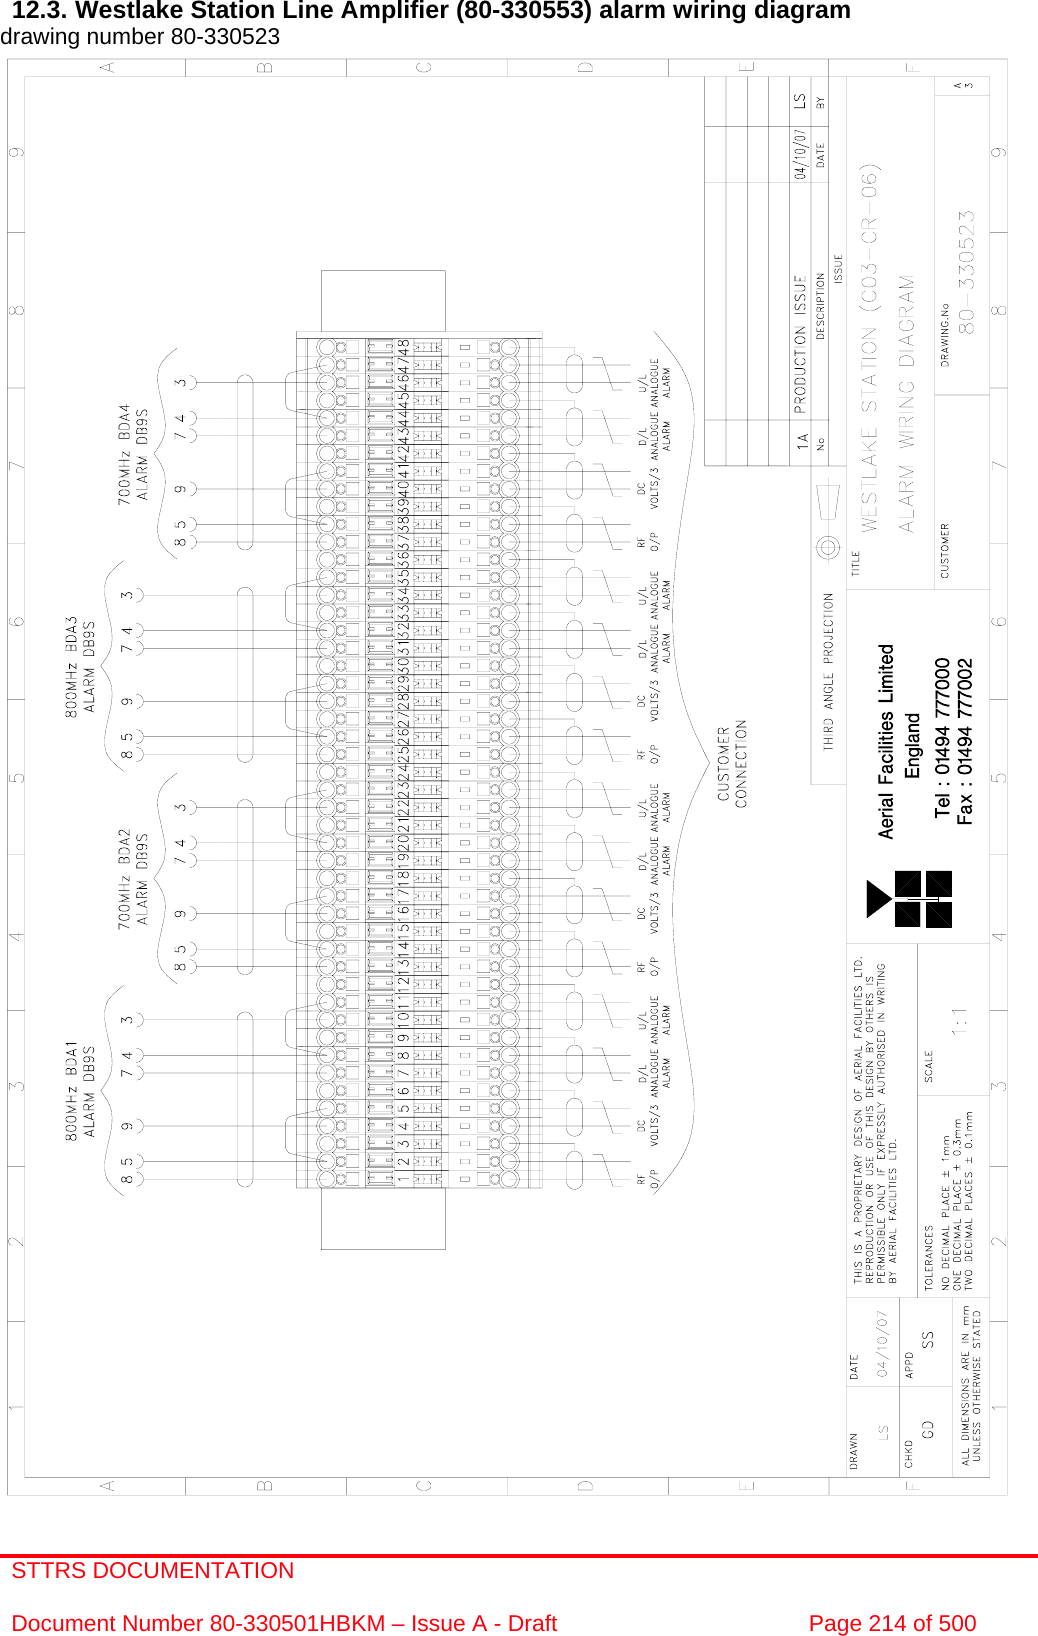 STTRS DOCUMENTATION  Document Number 80-330501HBKM – Issue A - Draft  Page 214 of 500   12.3. Westlake Station Line Amplifier (80-330553) alarm wiring diagram drawing number 80-330523                                                         